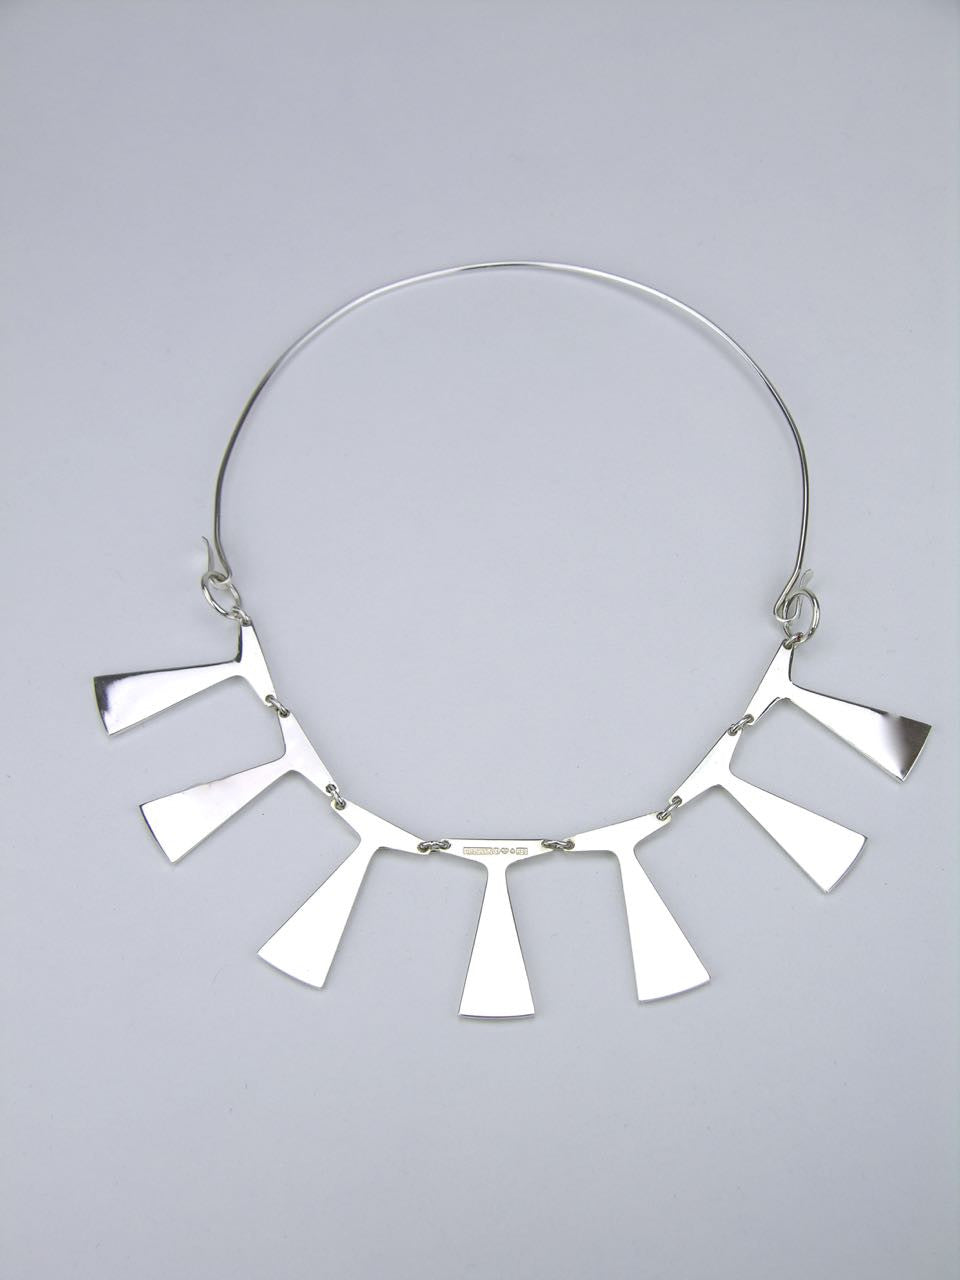 Vintage Gesons Silver Flared Spike Necklace - Sweden 1968